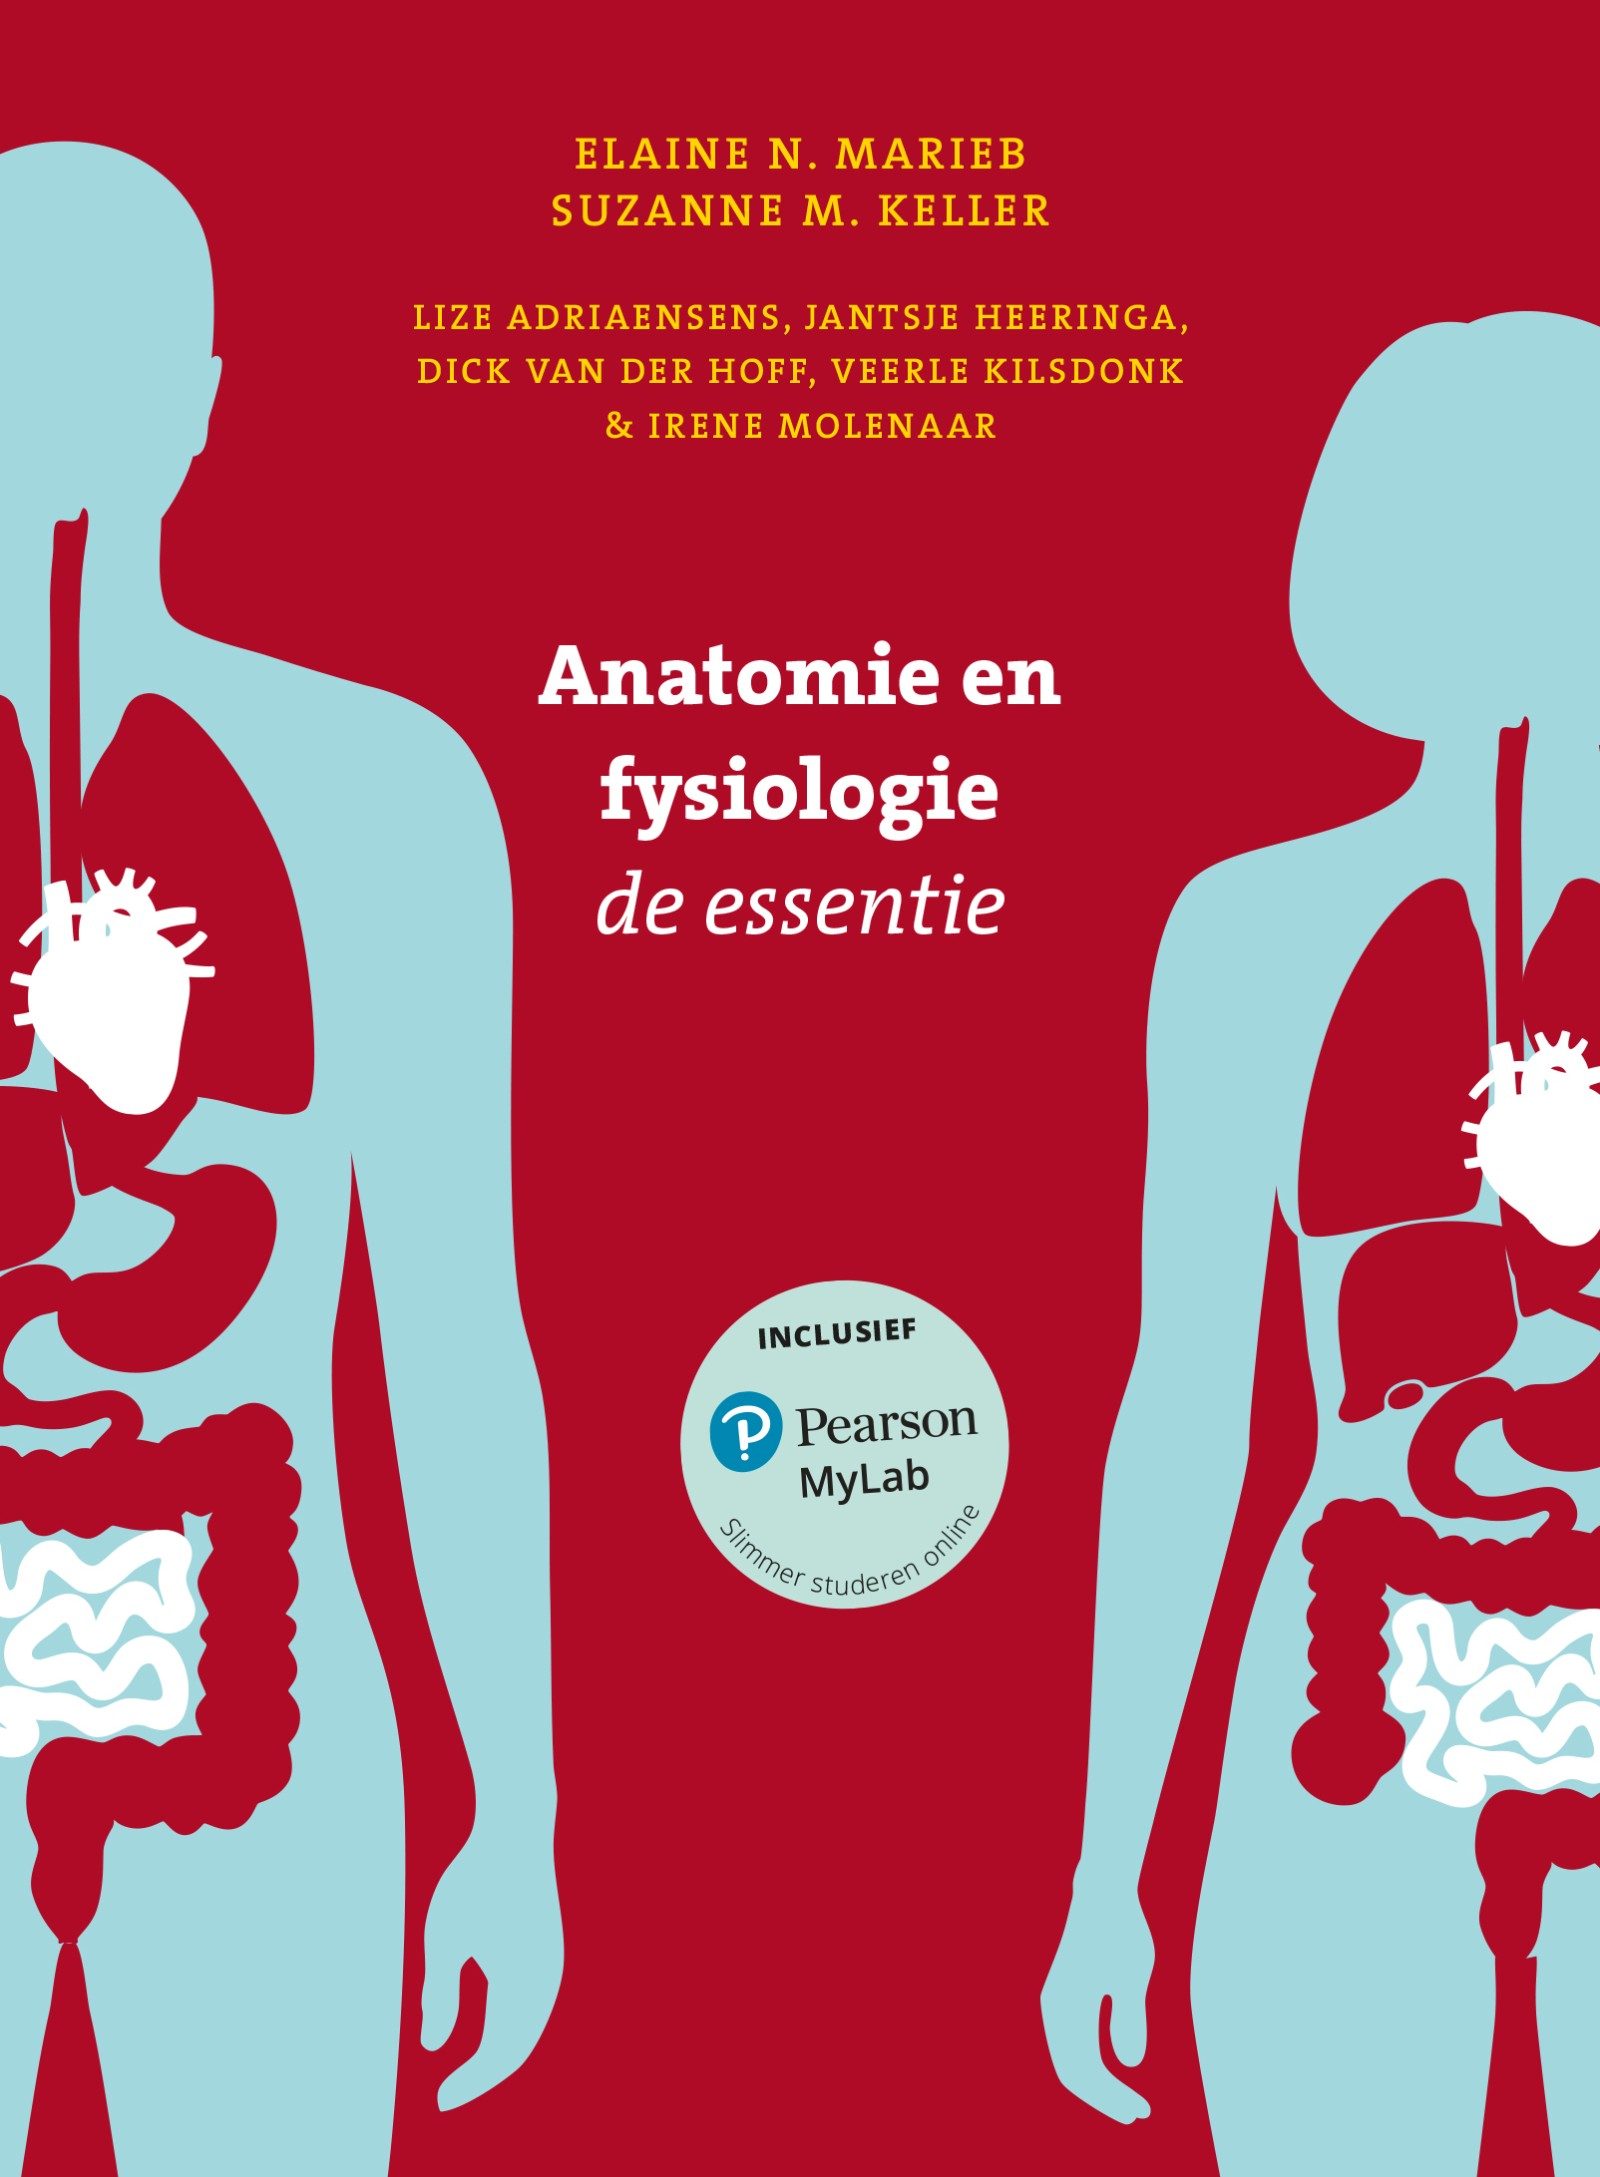 Cover Anatomie en fysiologie, 8e editie met MyLab